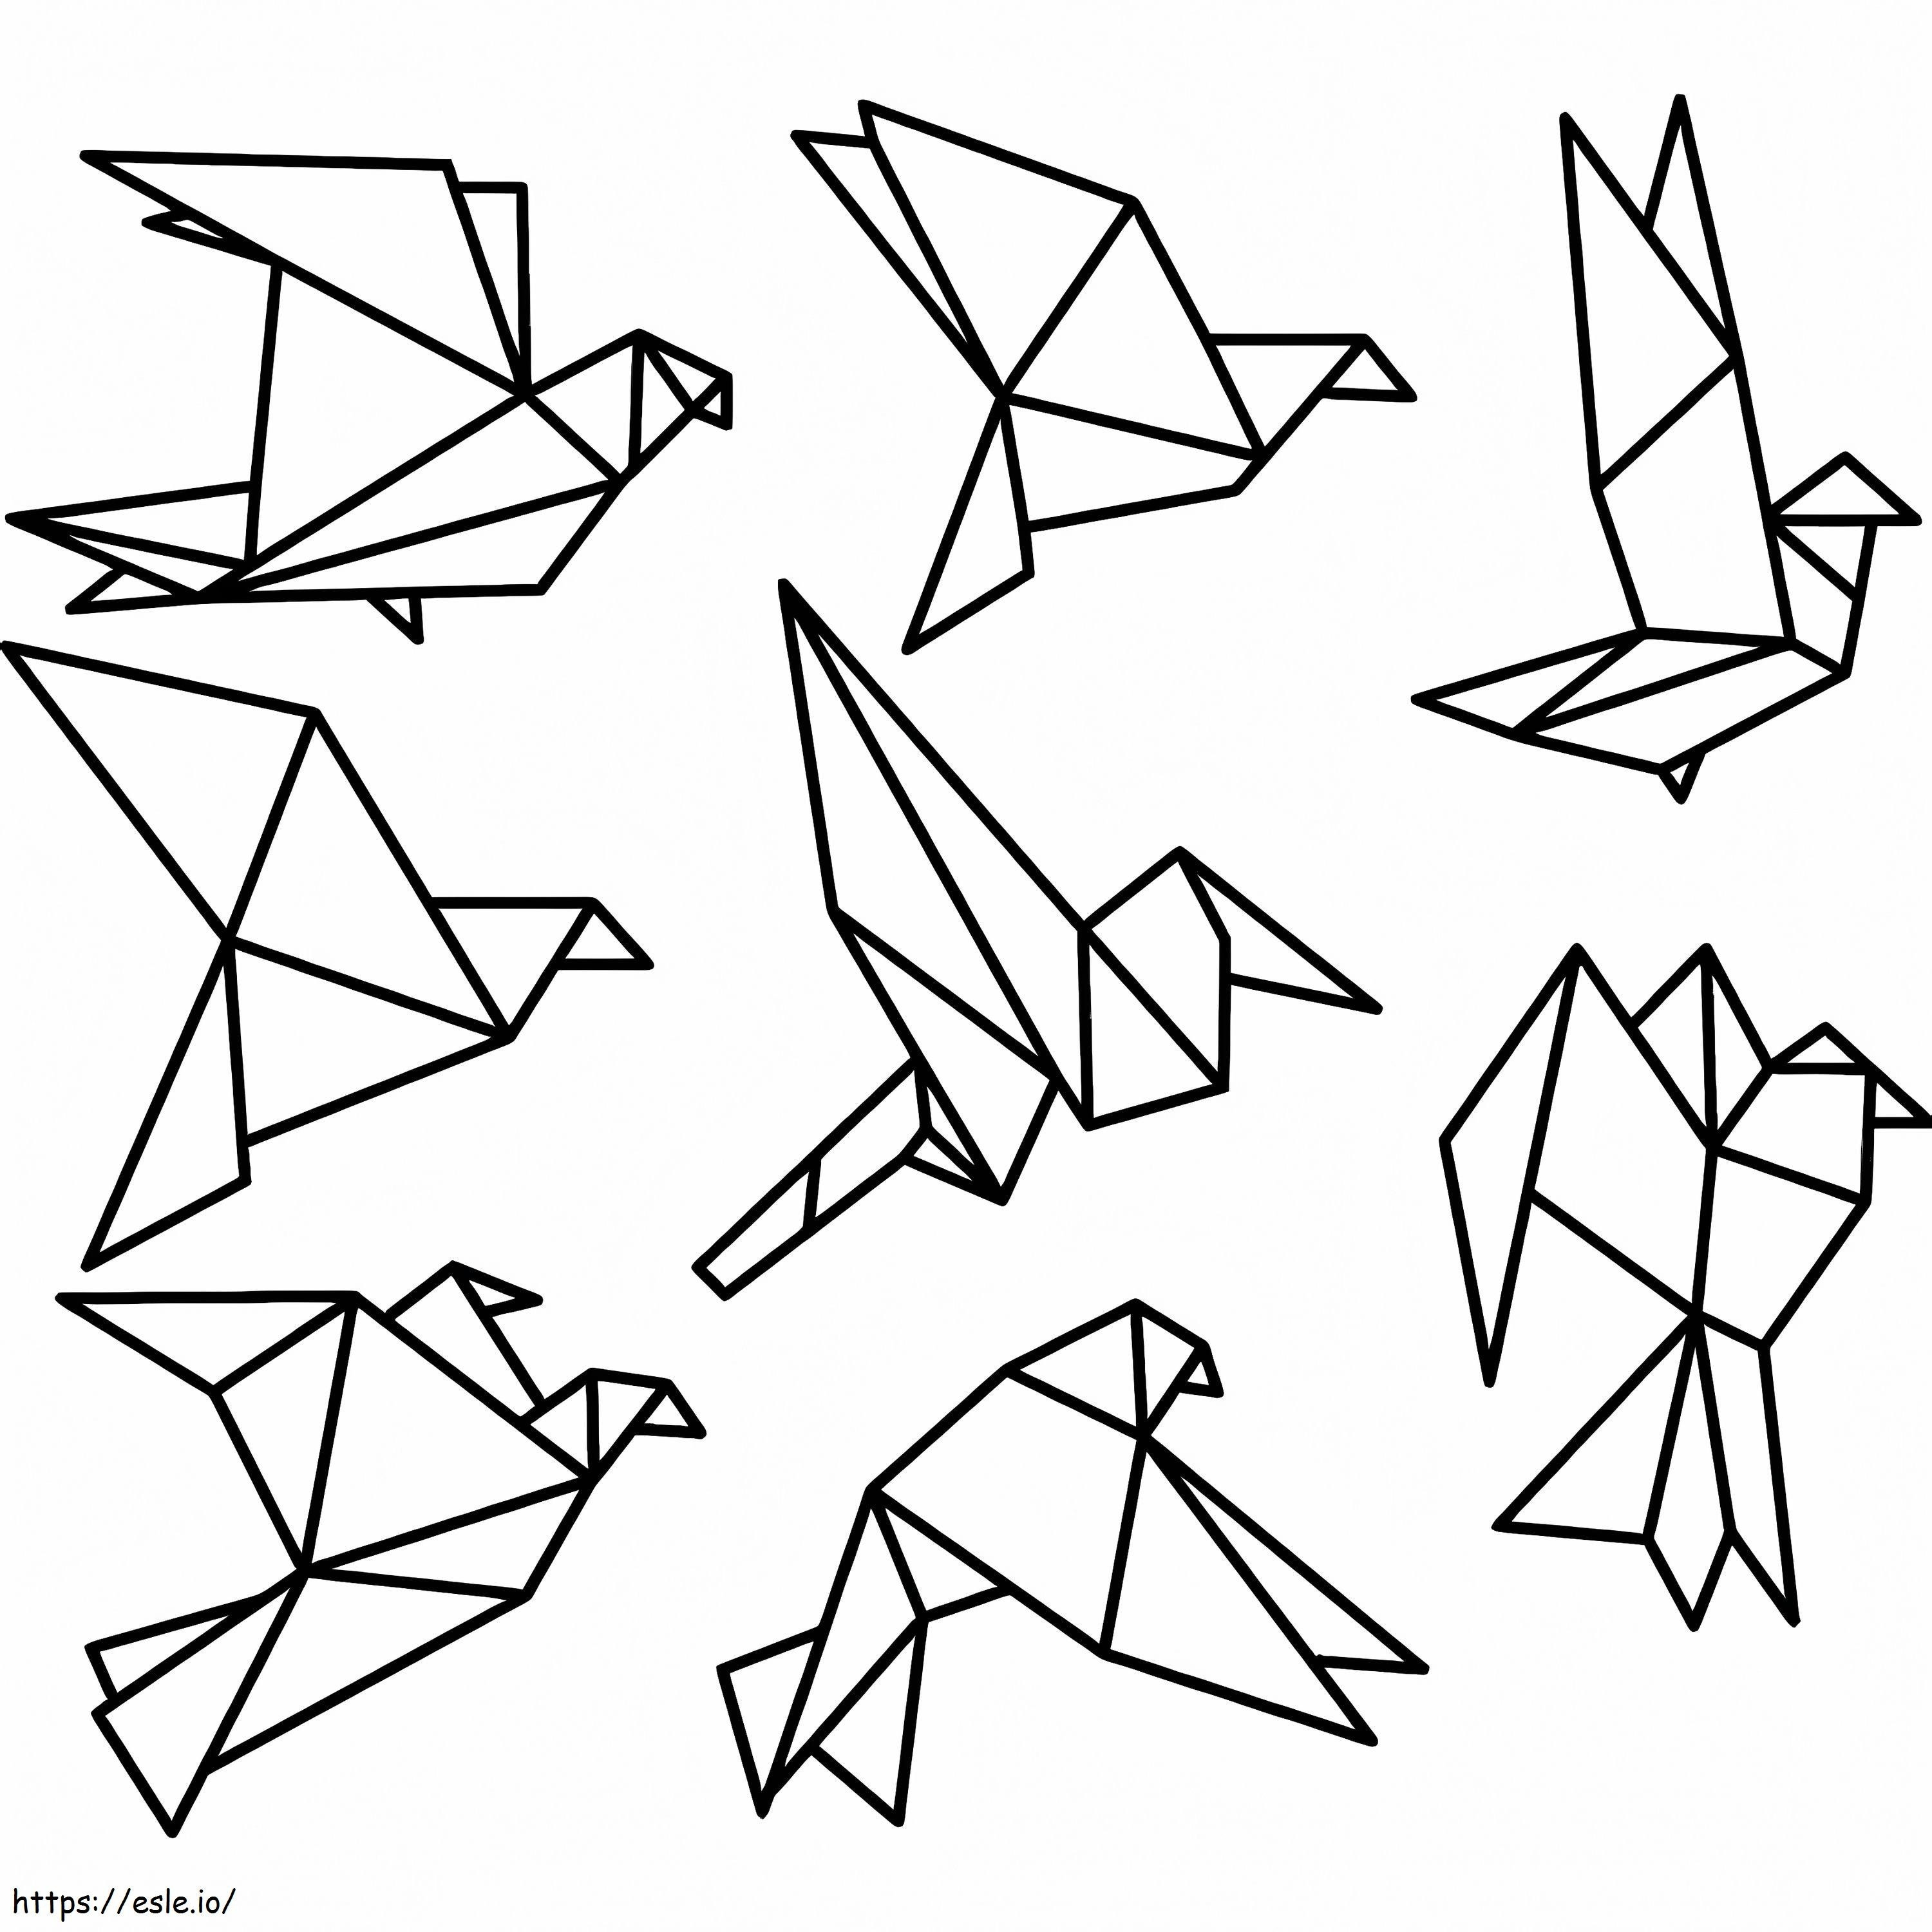 Origami Birds coloring page